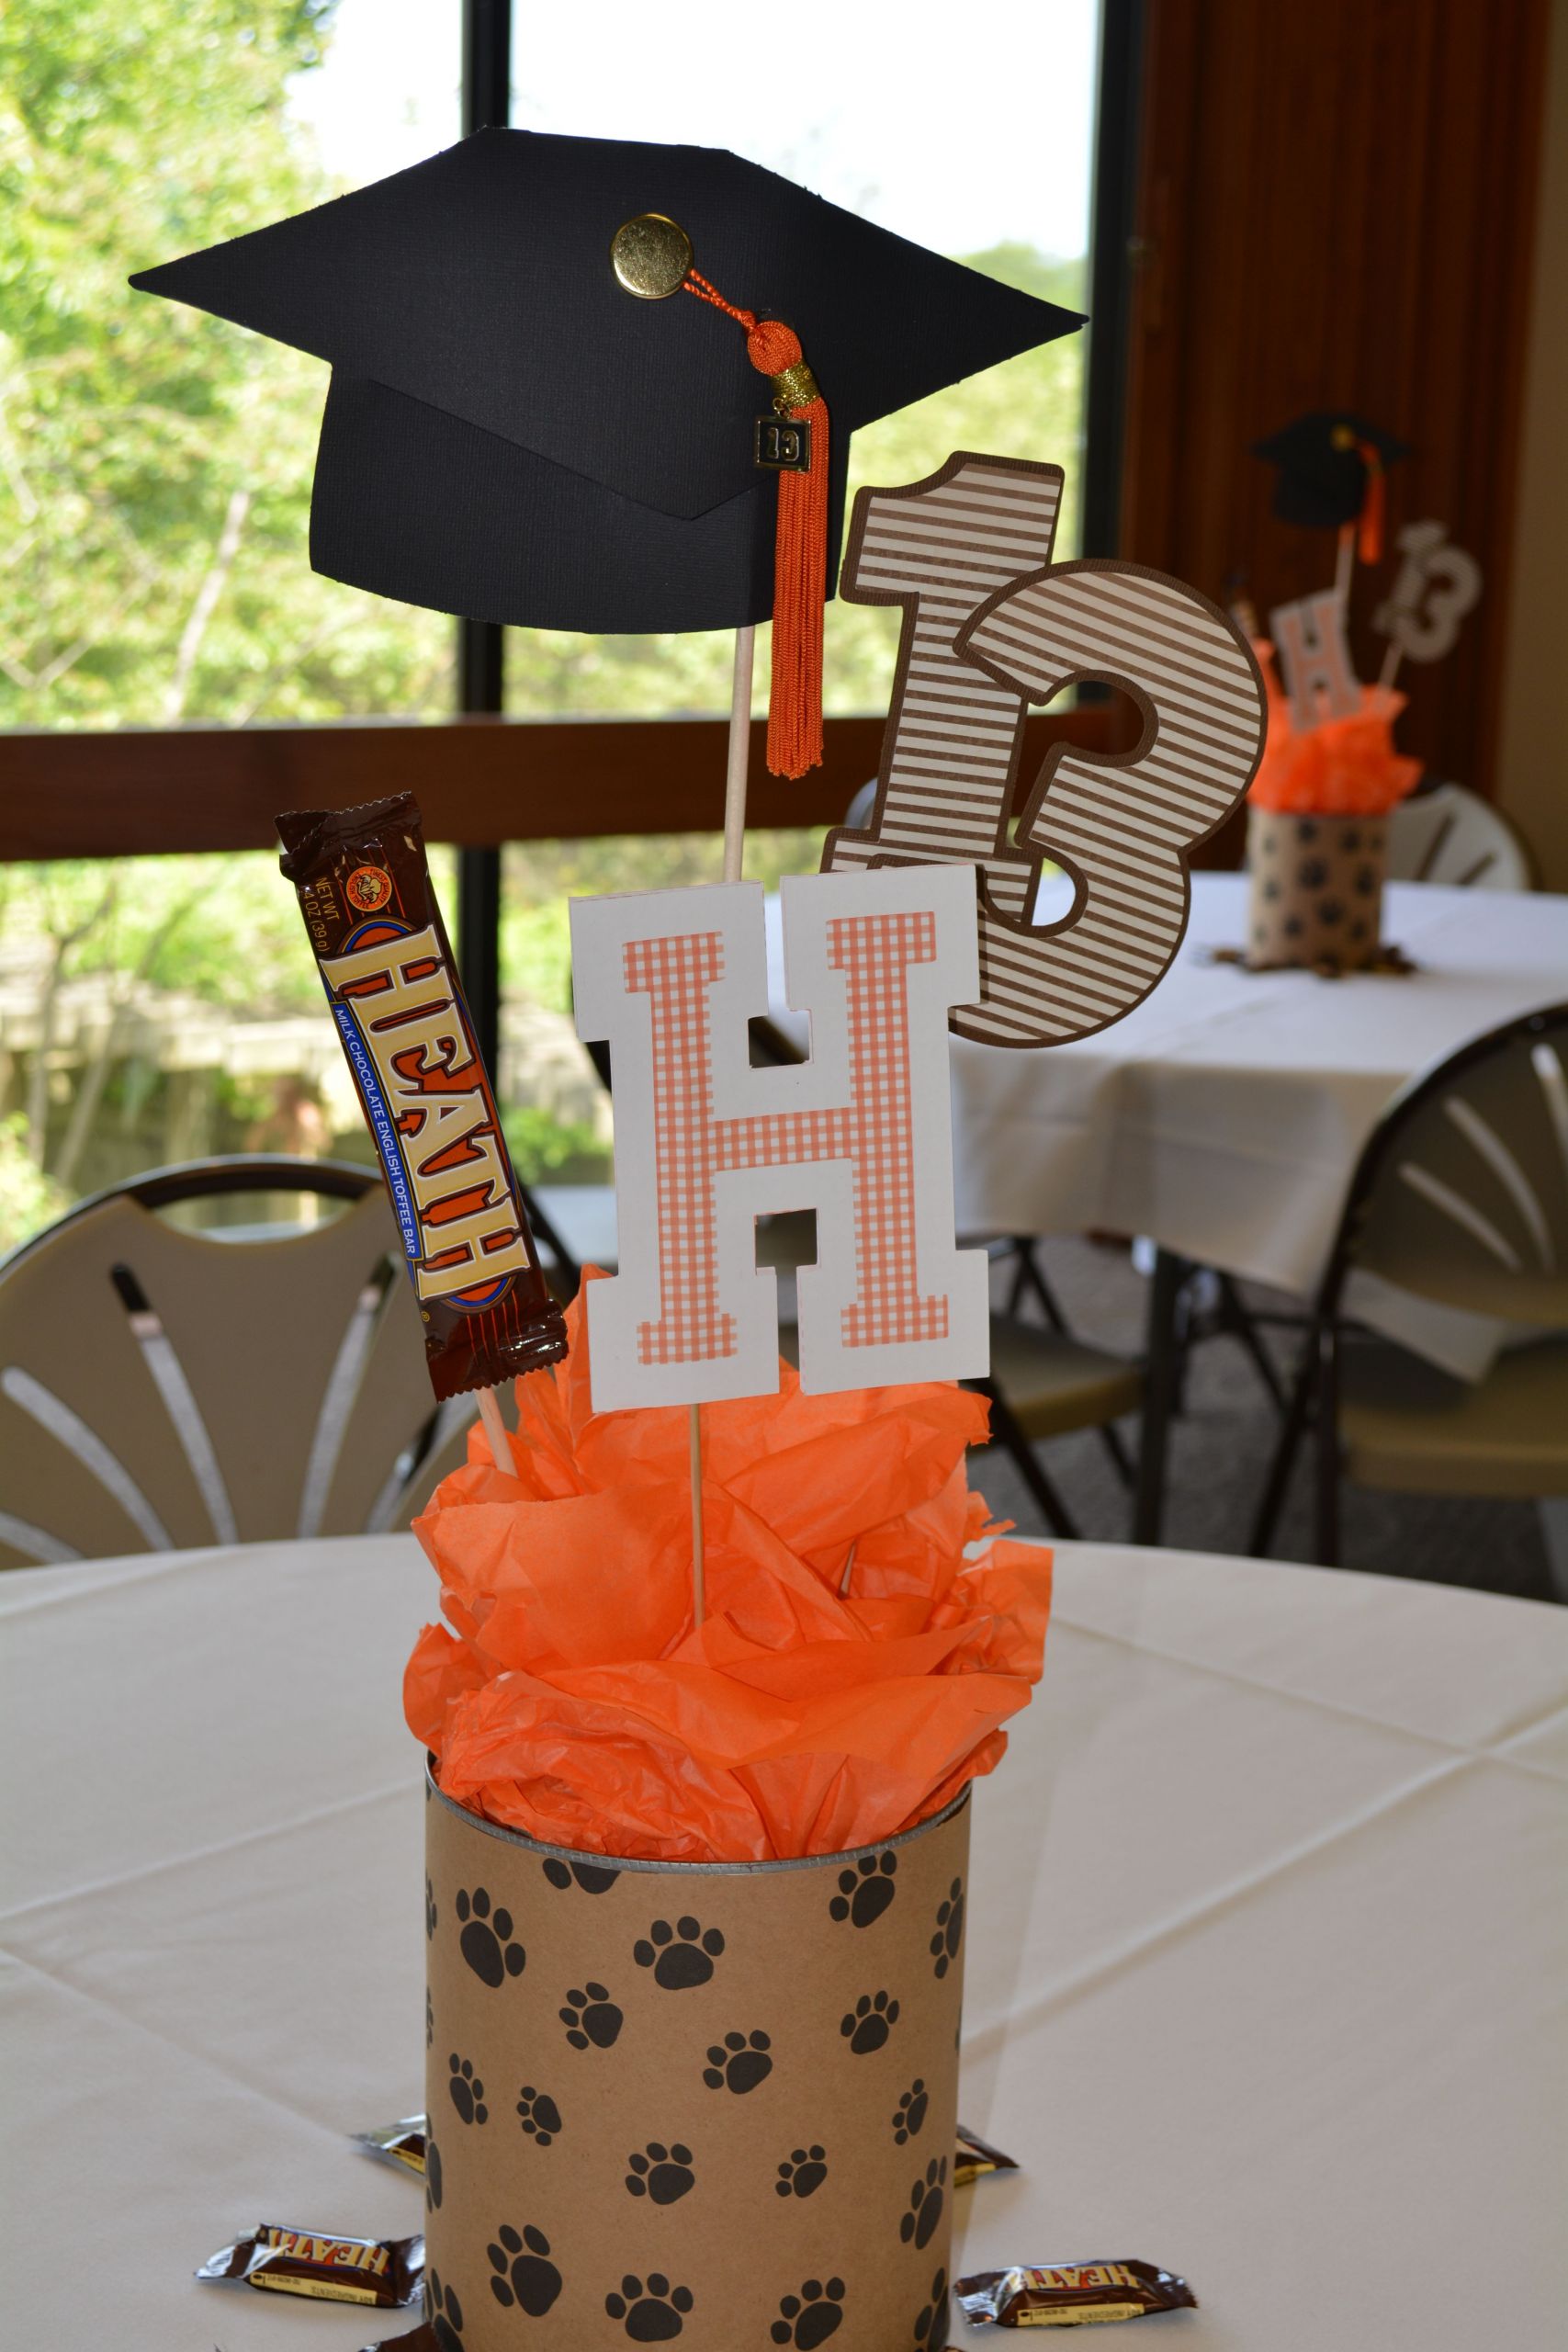 Table Decoration Ideas For Graduation Party
 Graduation table centerpieces with Cricut cuts Jolee